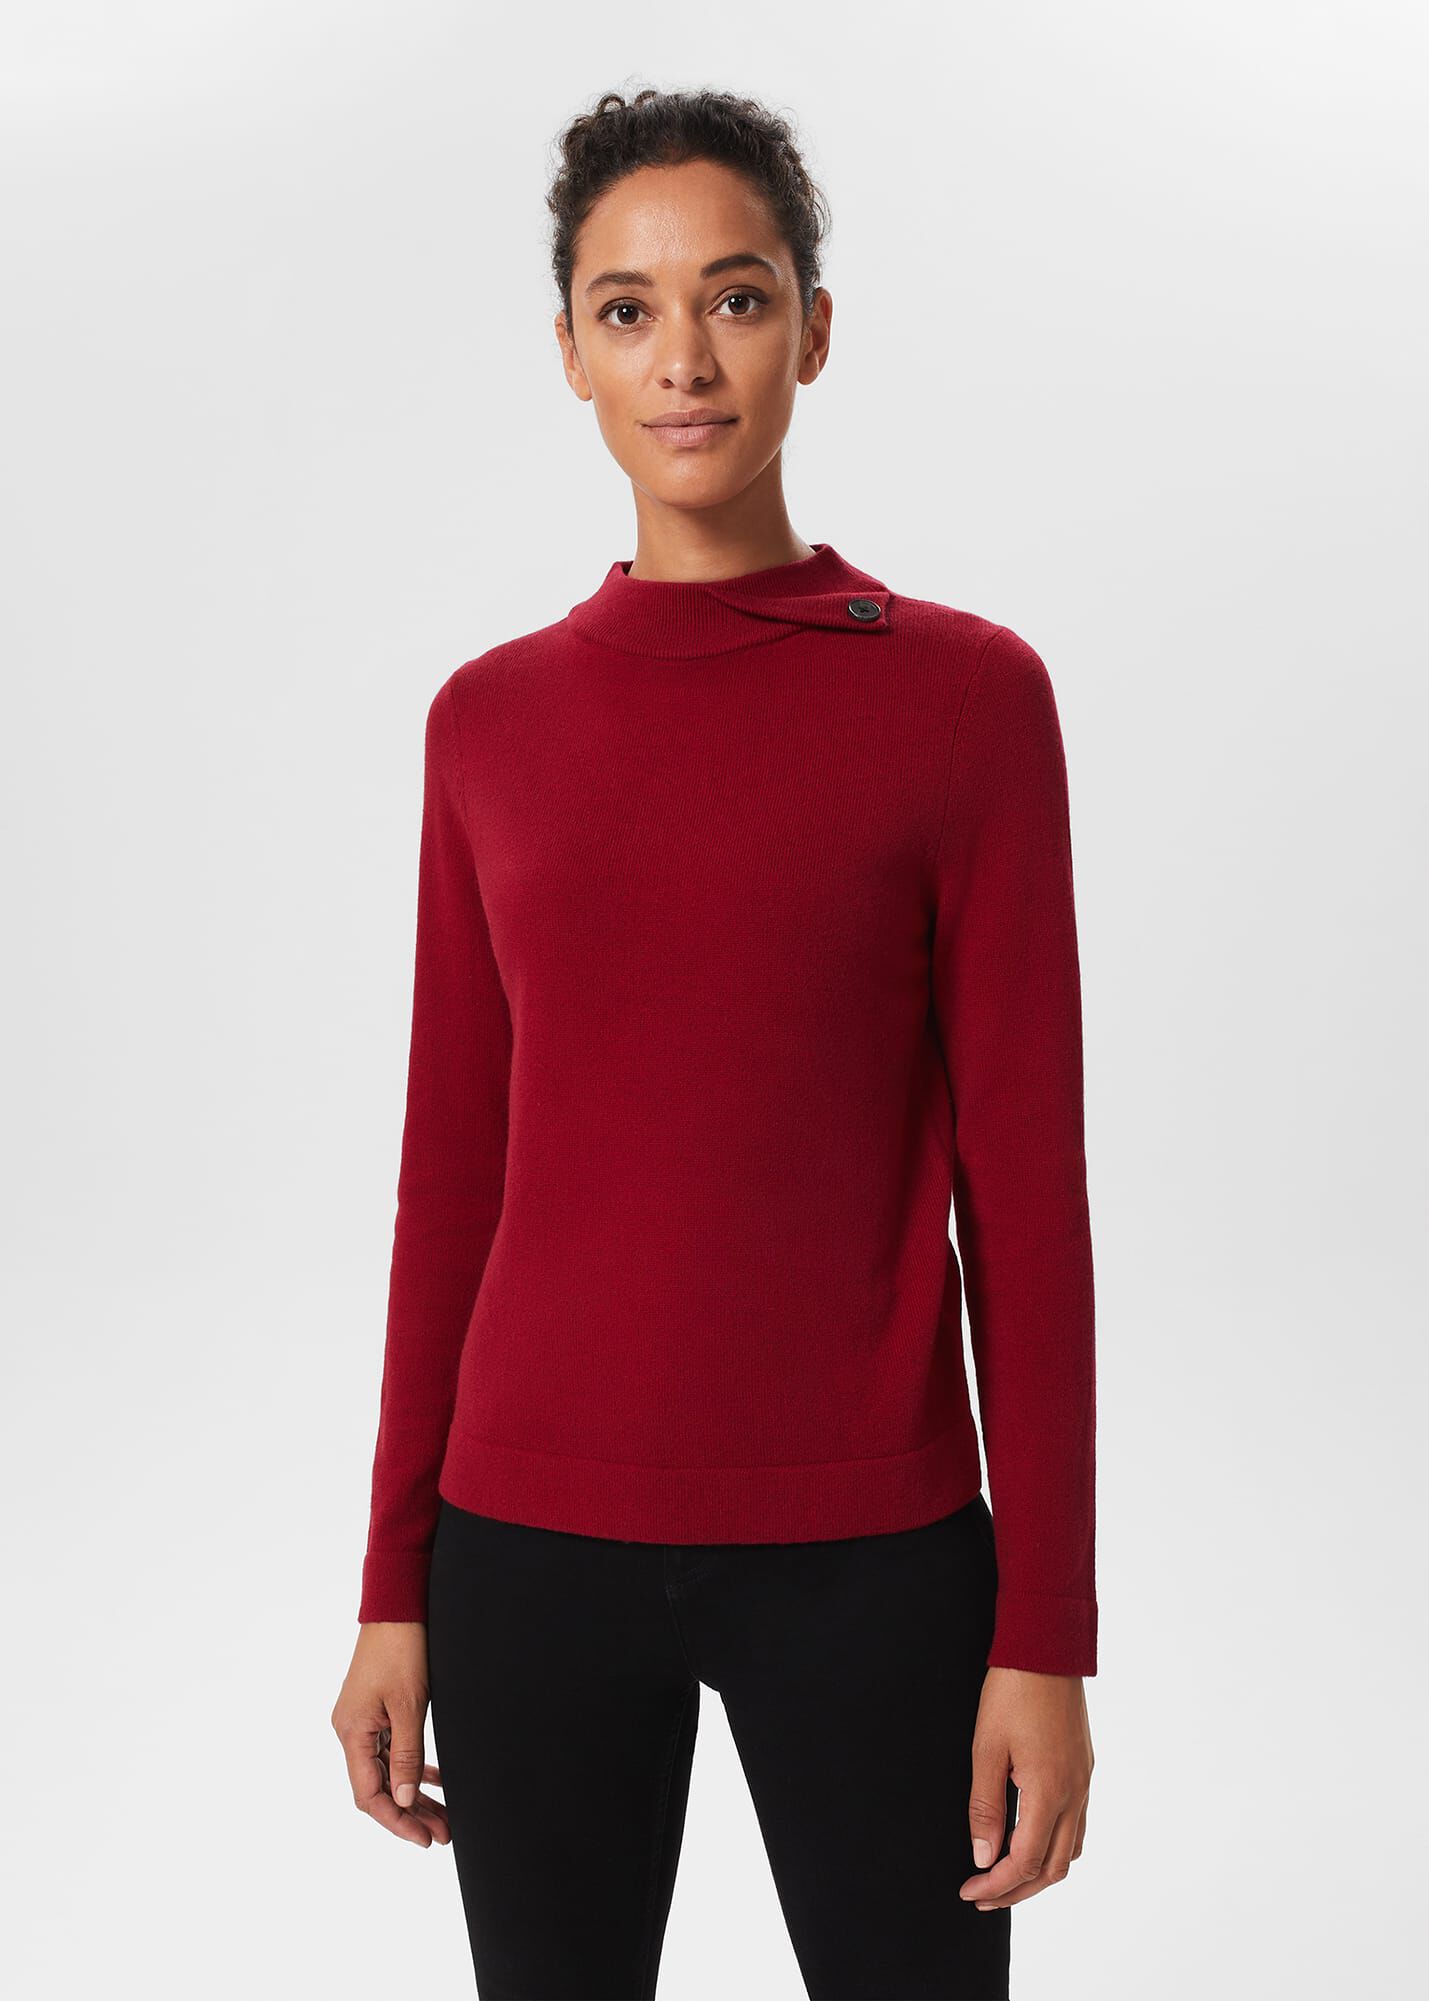 discount 89% Mango cardigan WOMEN FASHION Jumpers & Sweatshirts Cardigan Casual Red M 